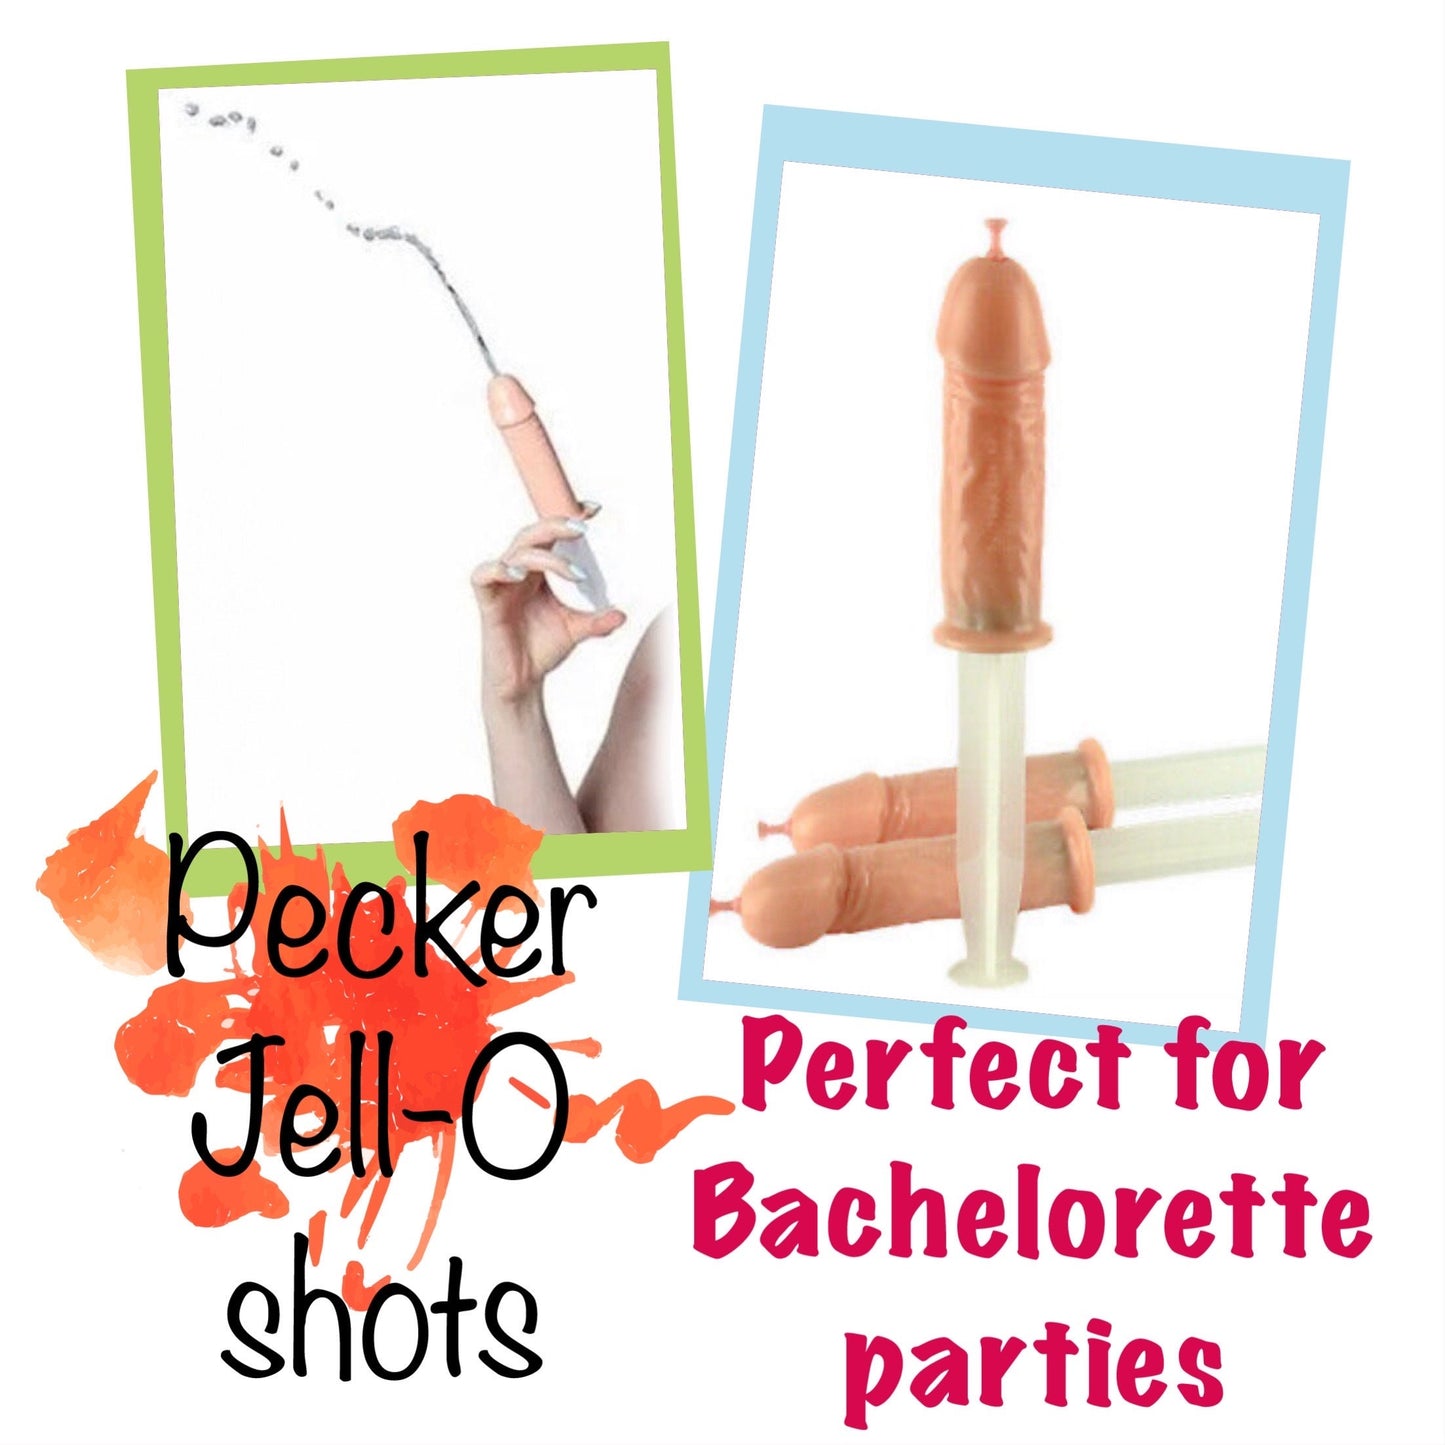 Bachelorette penis syringe | Bachelorette accessories| penis Jell-O shots|Hen party|Penis shooters|Pecker party |Jello penis shooters/shots - Pink Fantasma 